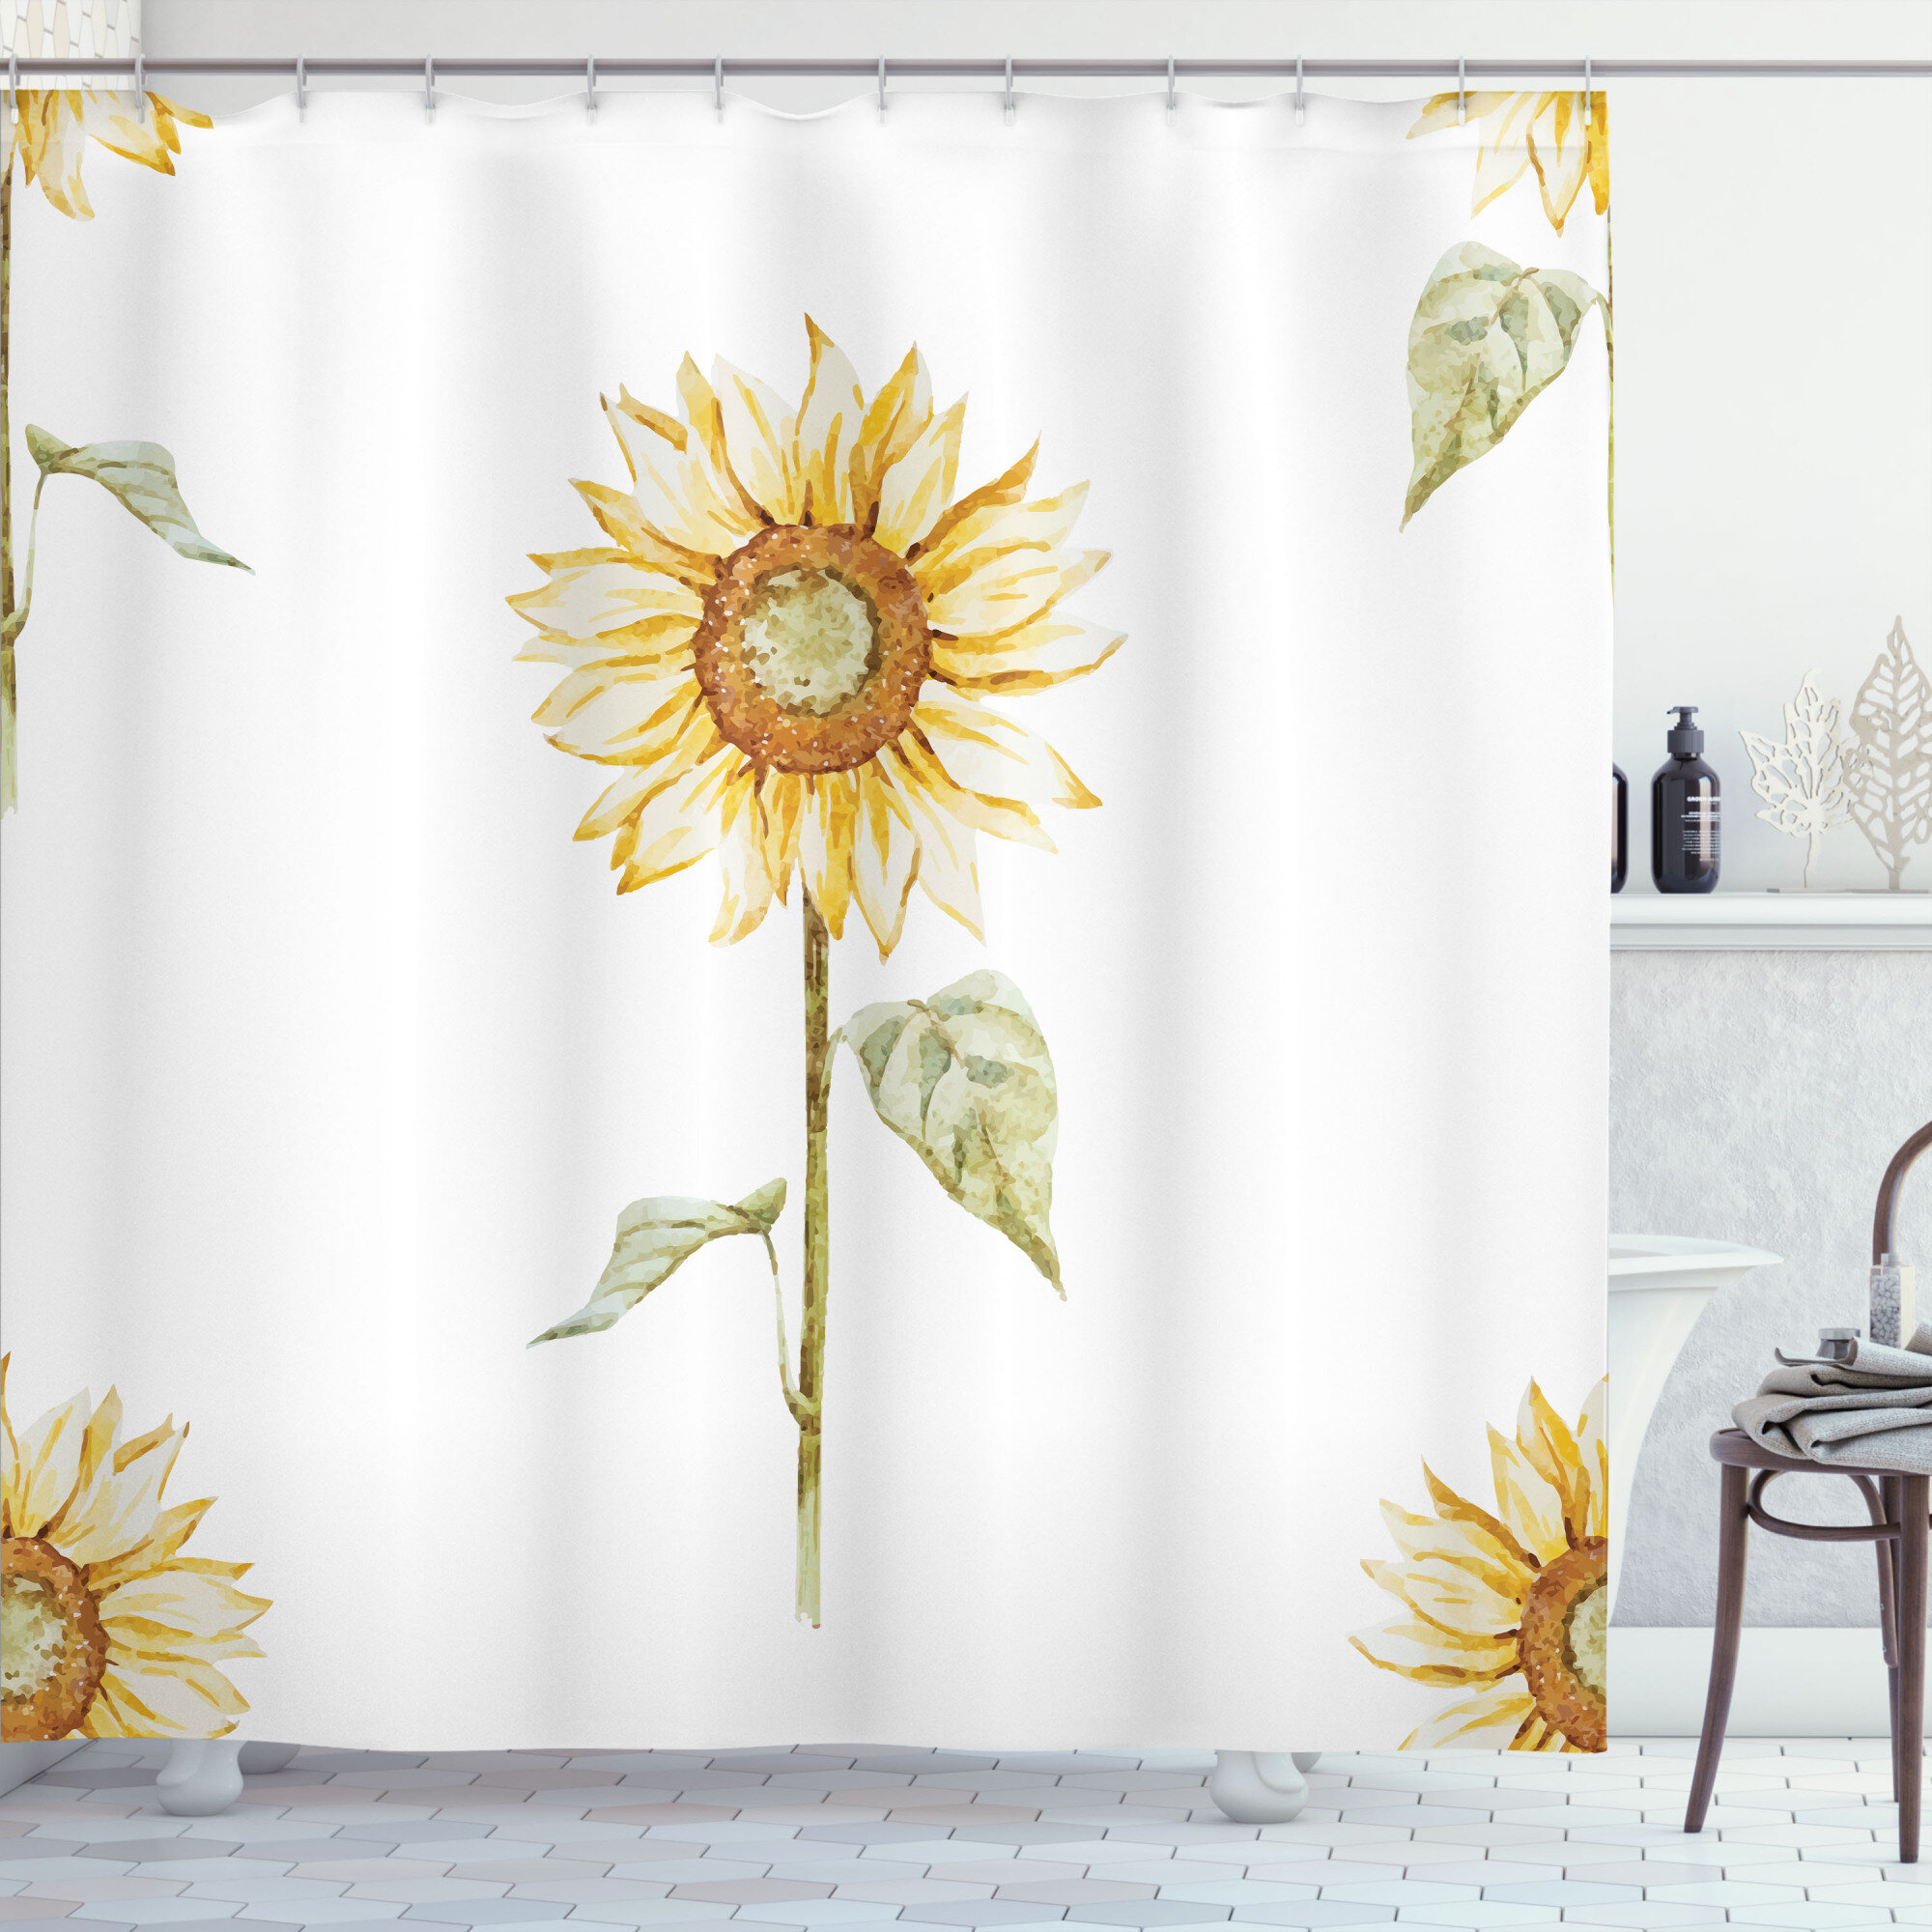 Sunrise Golden Sunflowers Fabric Shower Curtain Set & Hooks Bathroom Decor Mat 